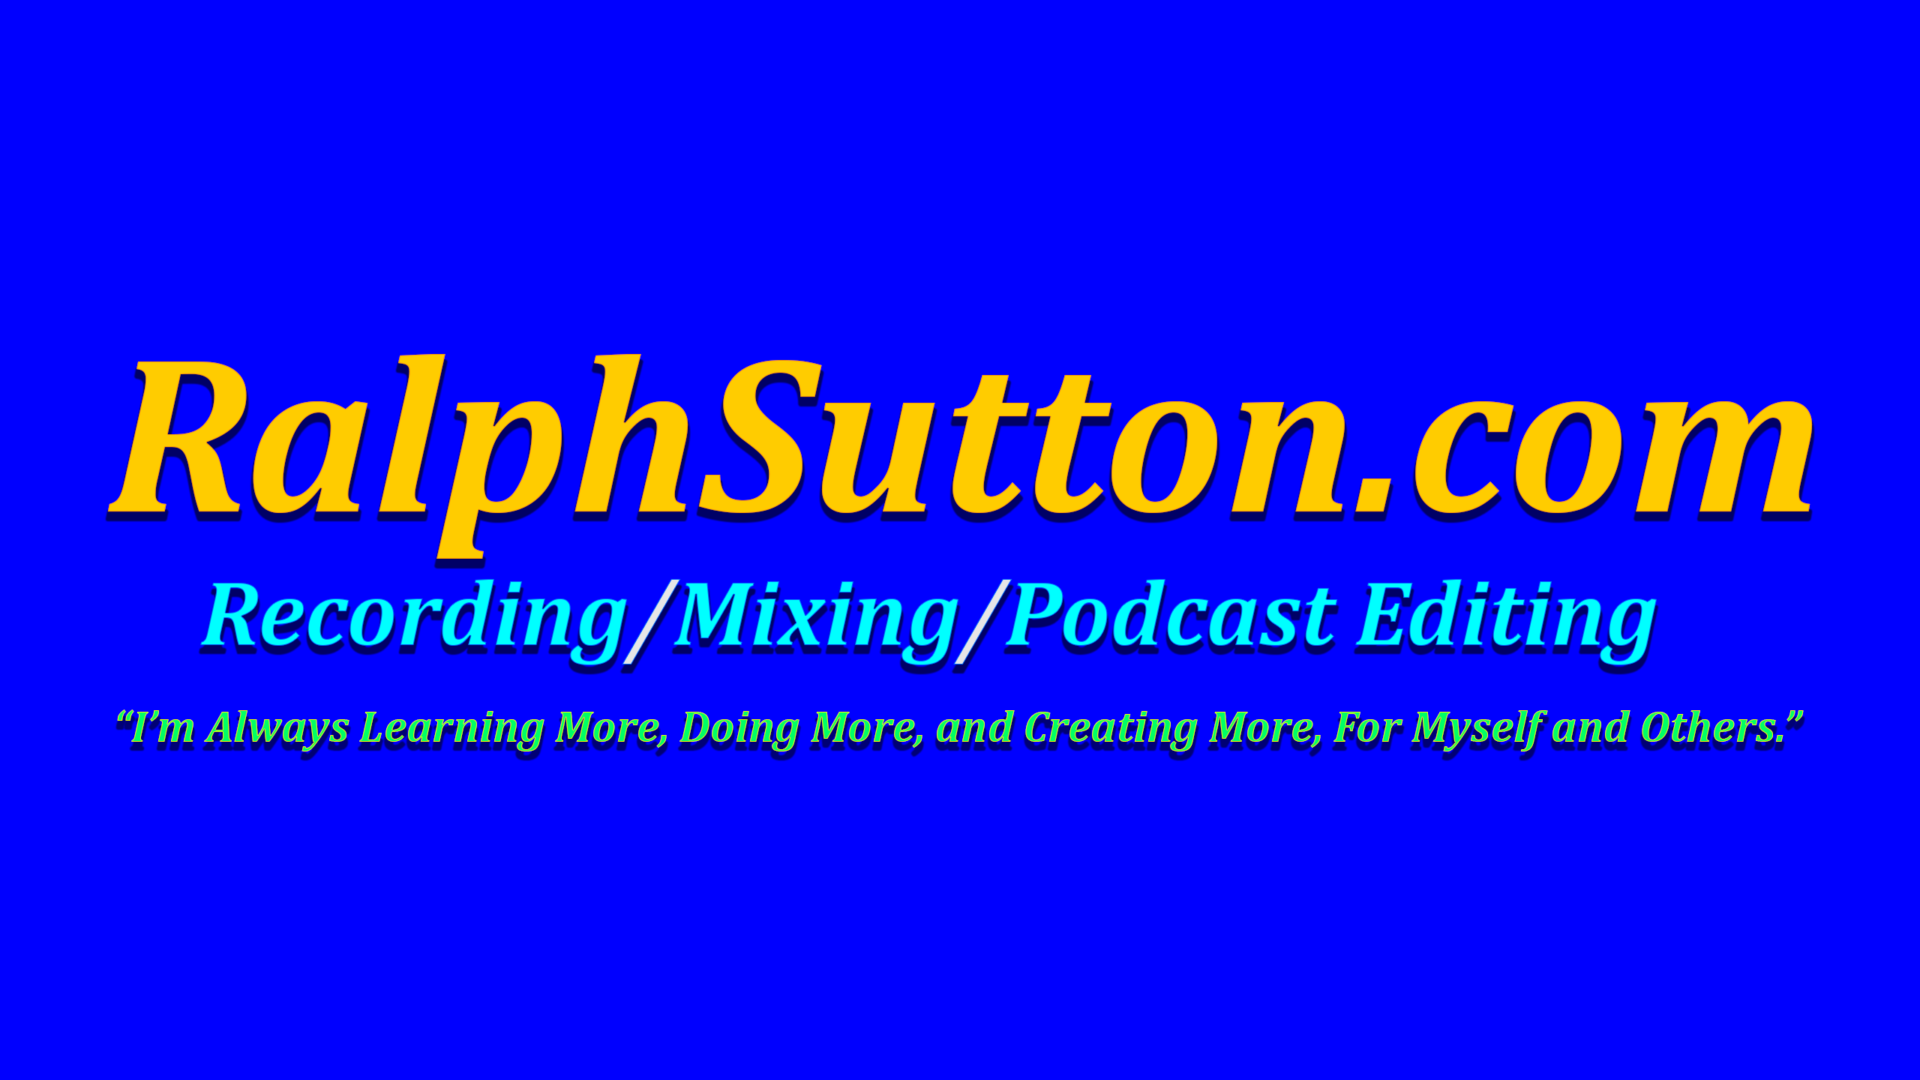 RalphSutton.com Recording Engineering Services Logo